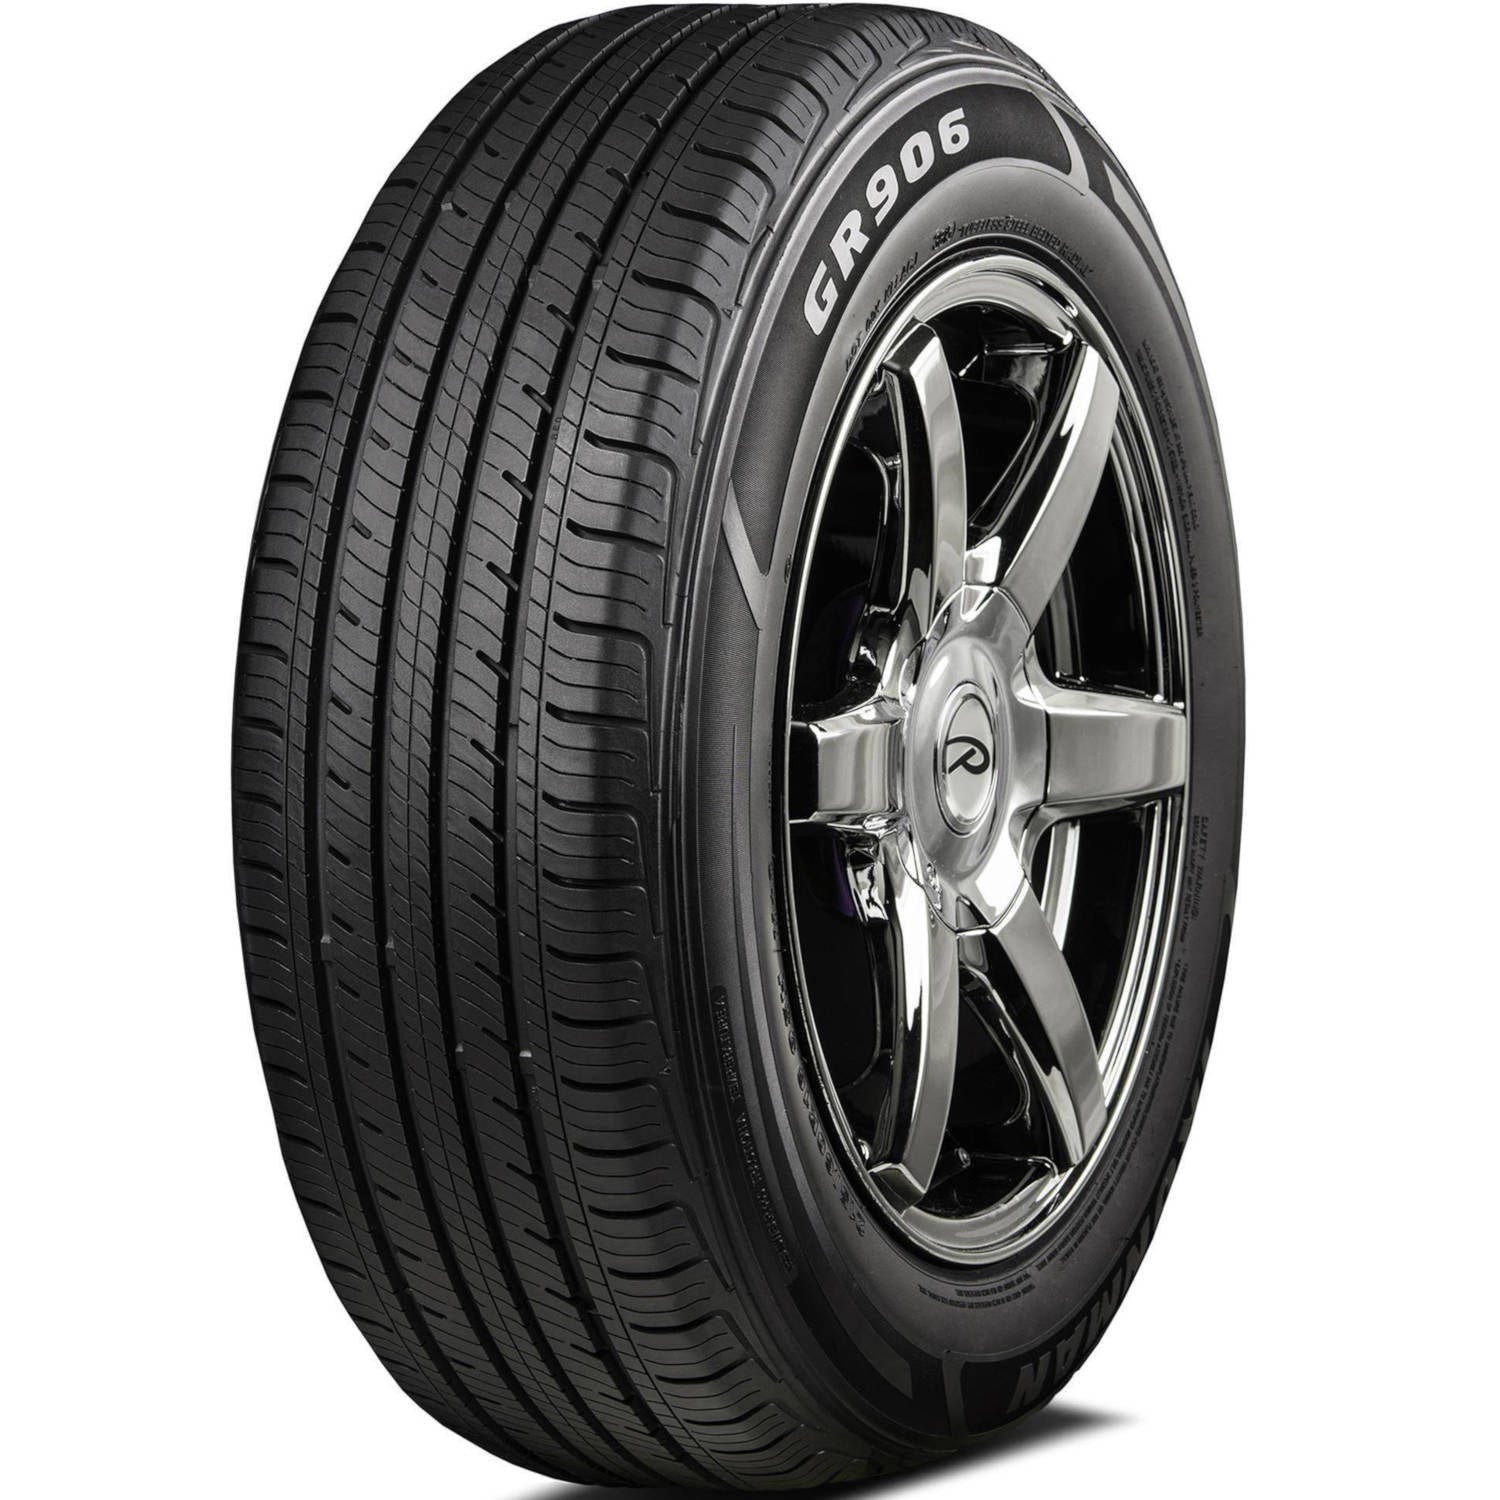 IRONMAN GR906 205/60R16 (25.7X8.1R 16) Tires